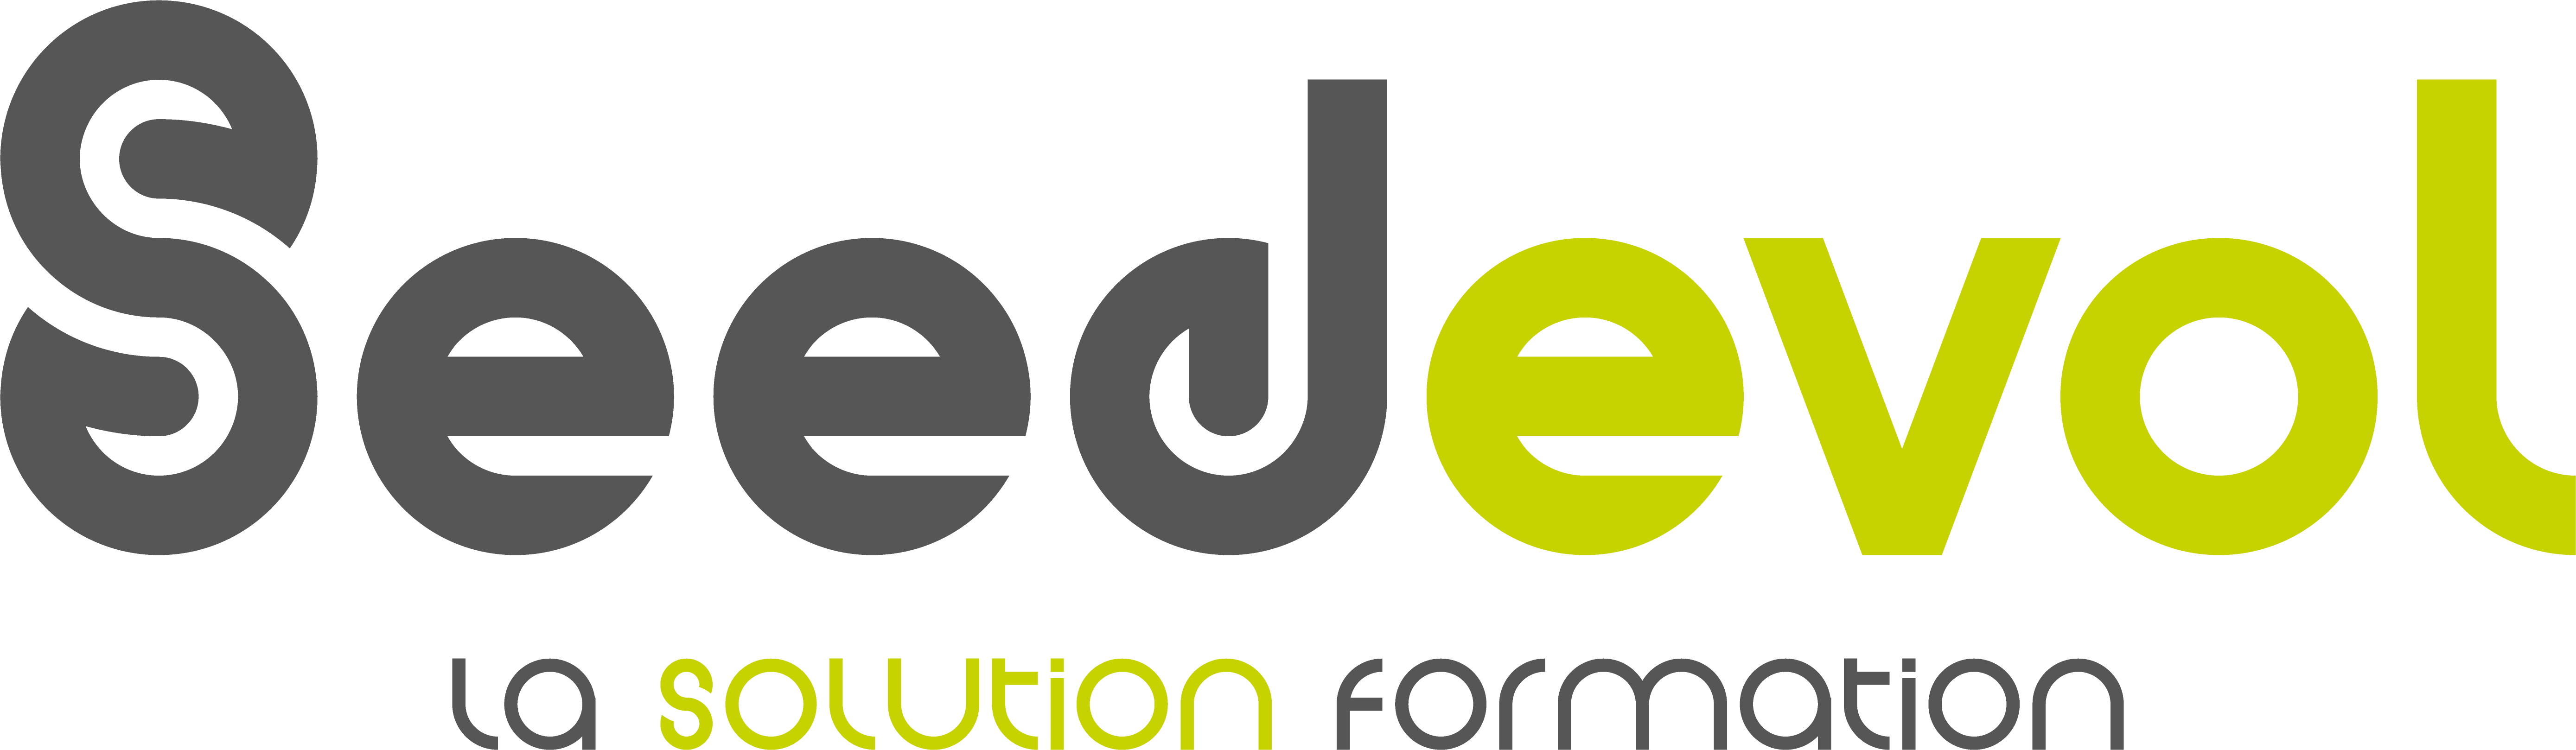 logo_seedevol